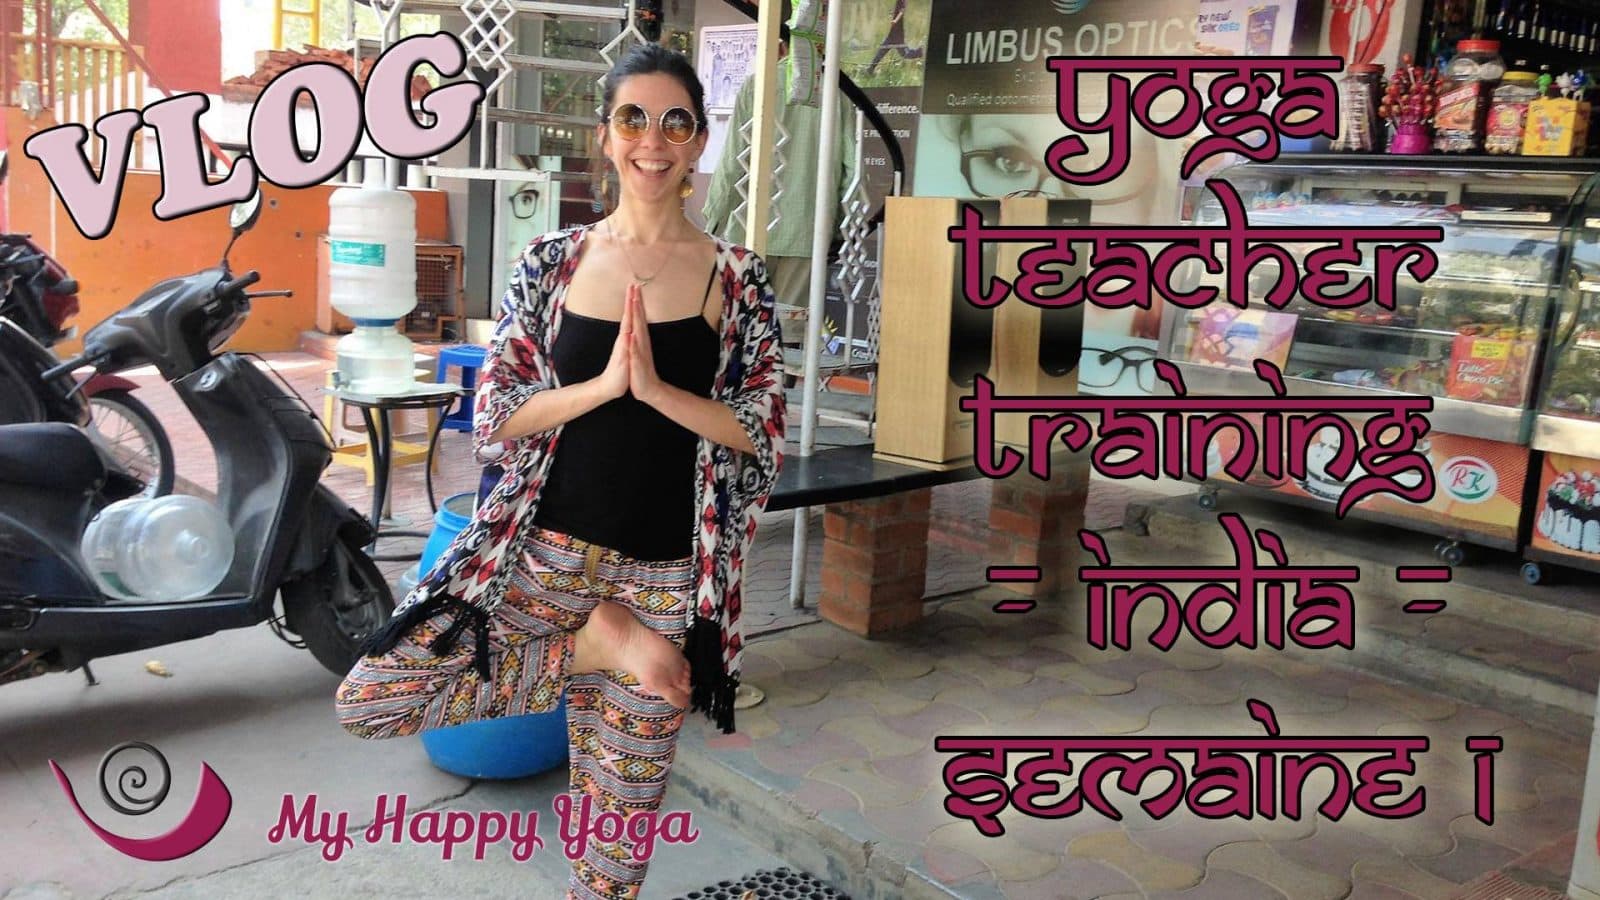 Yoga teacher training India